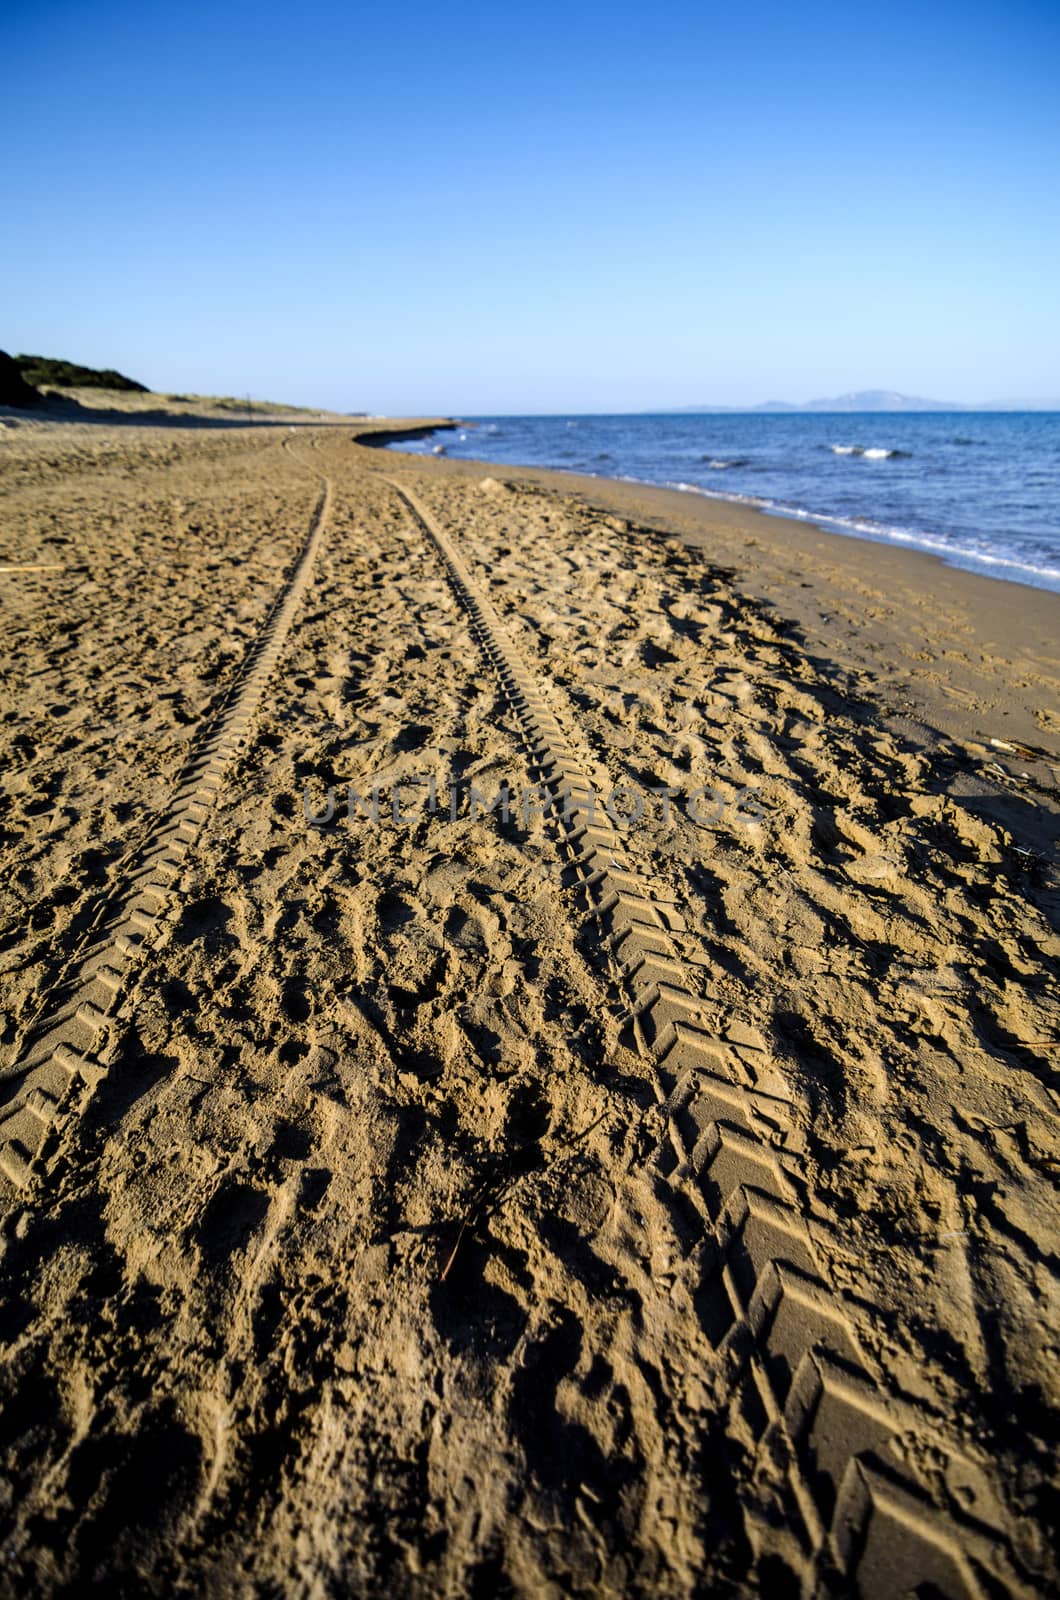 Quad bike tyre tracks on a sandy beach in Greece.